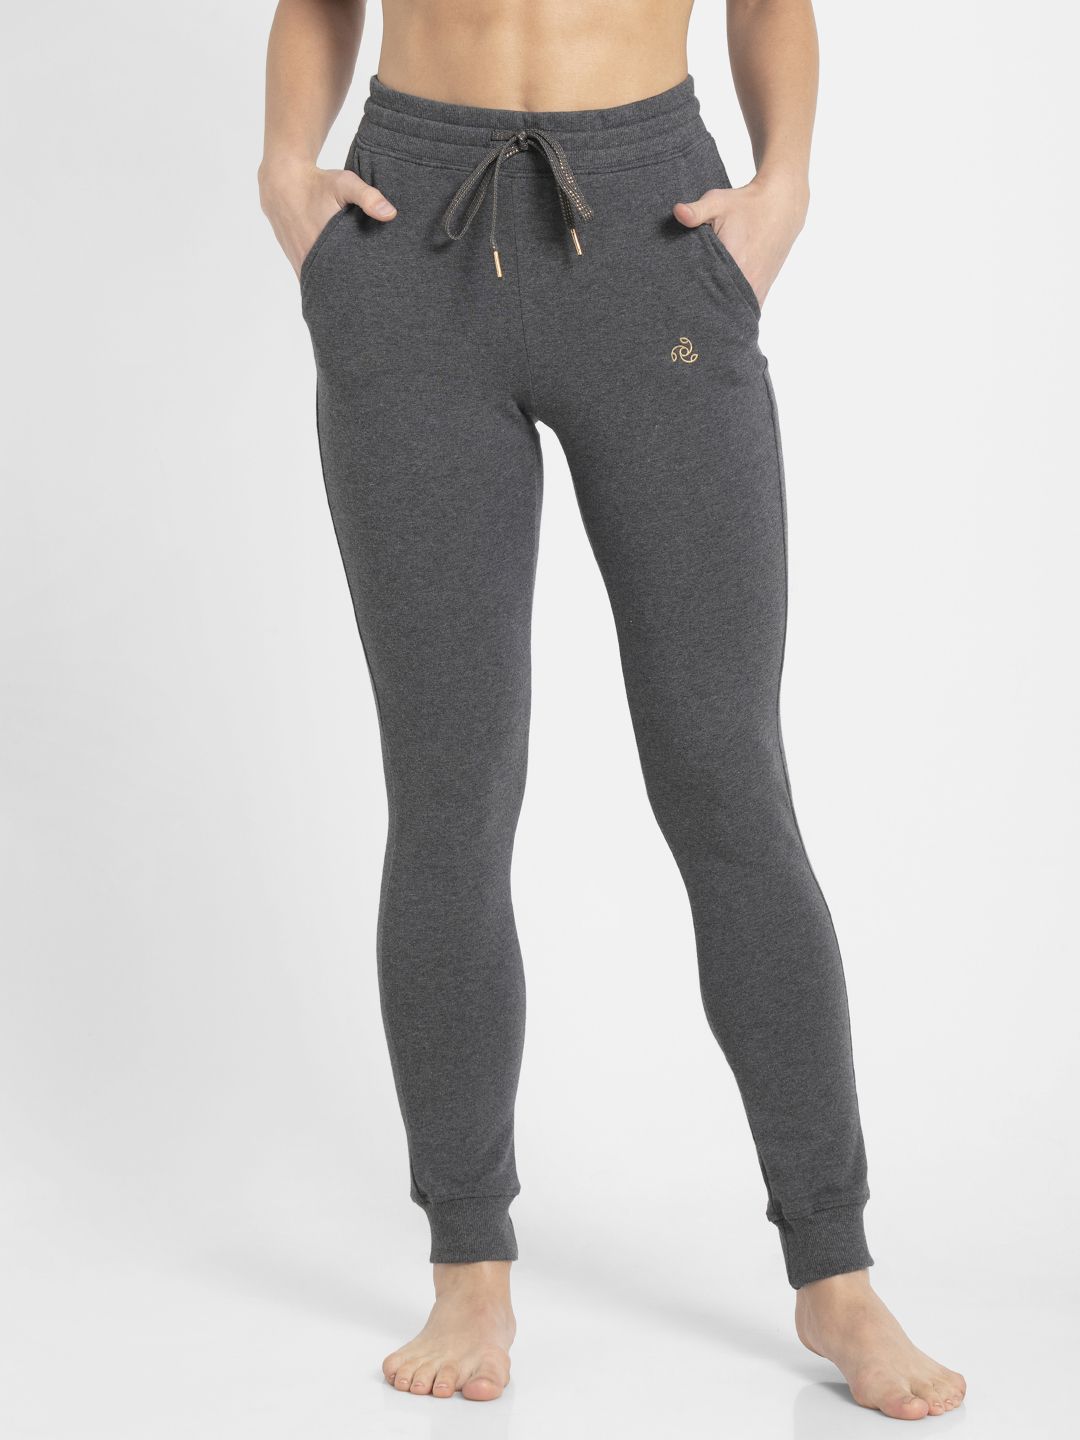 Jockey Women Charcoal Grey Slim Fit Lounge Pants 1323-0103 Price in India